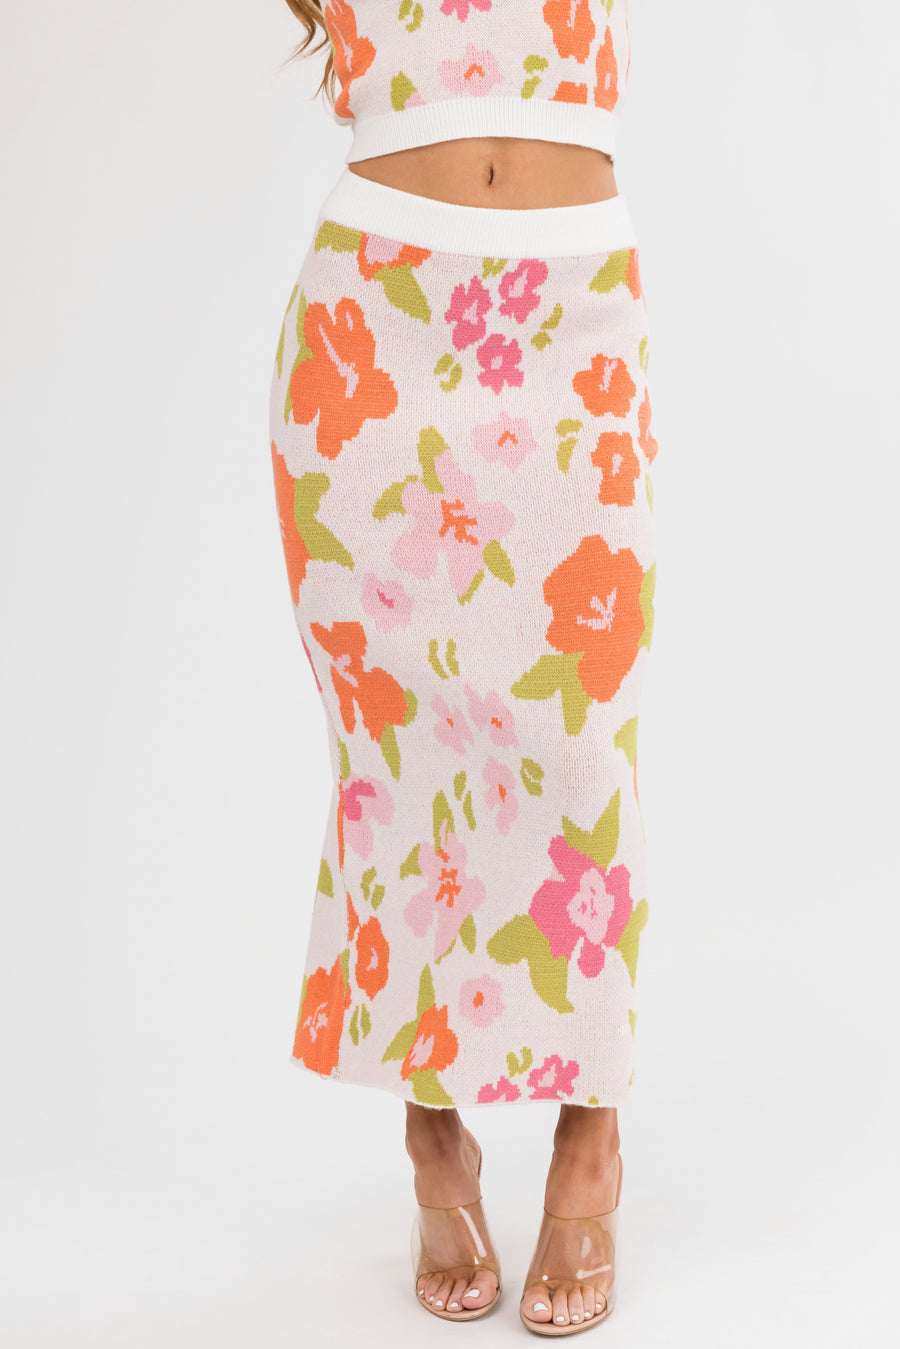 Dusty Blush Floral Print Knit Midi Skirt